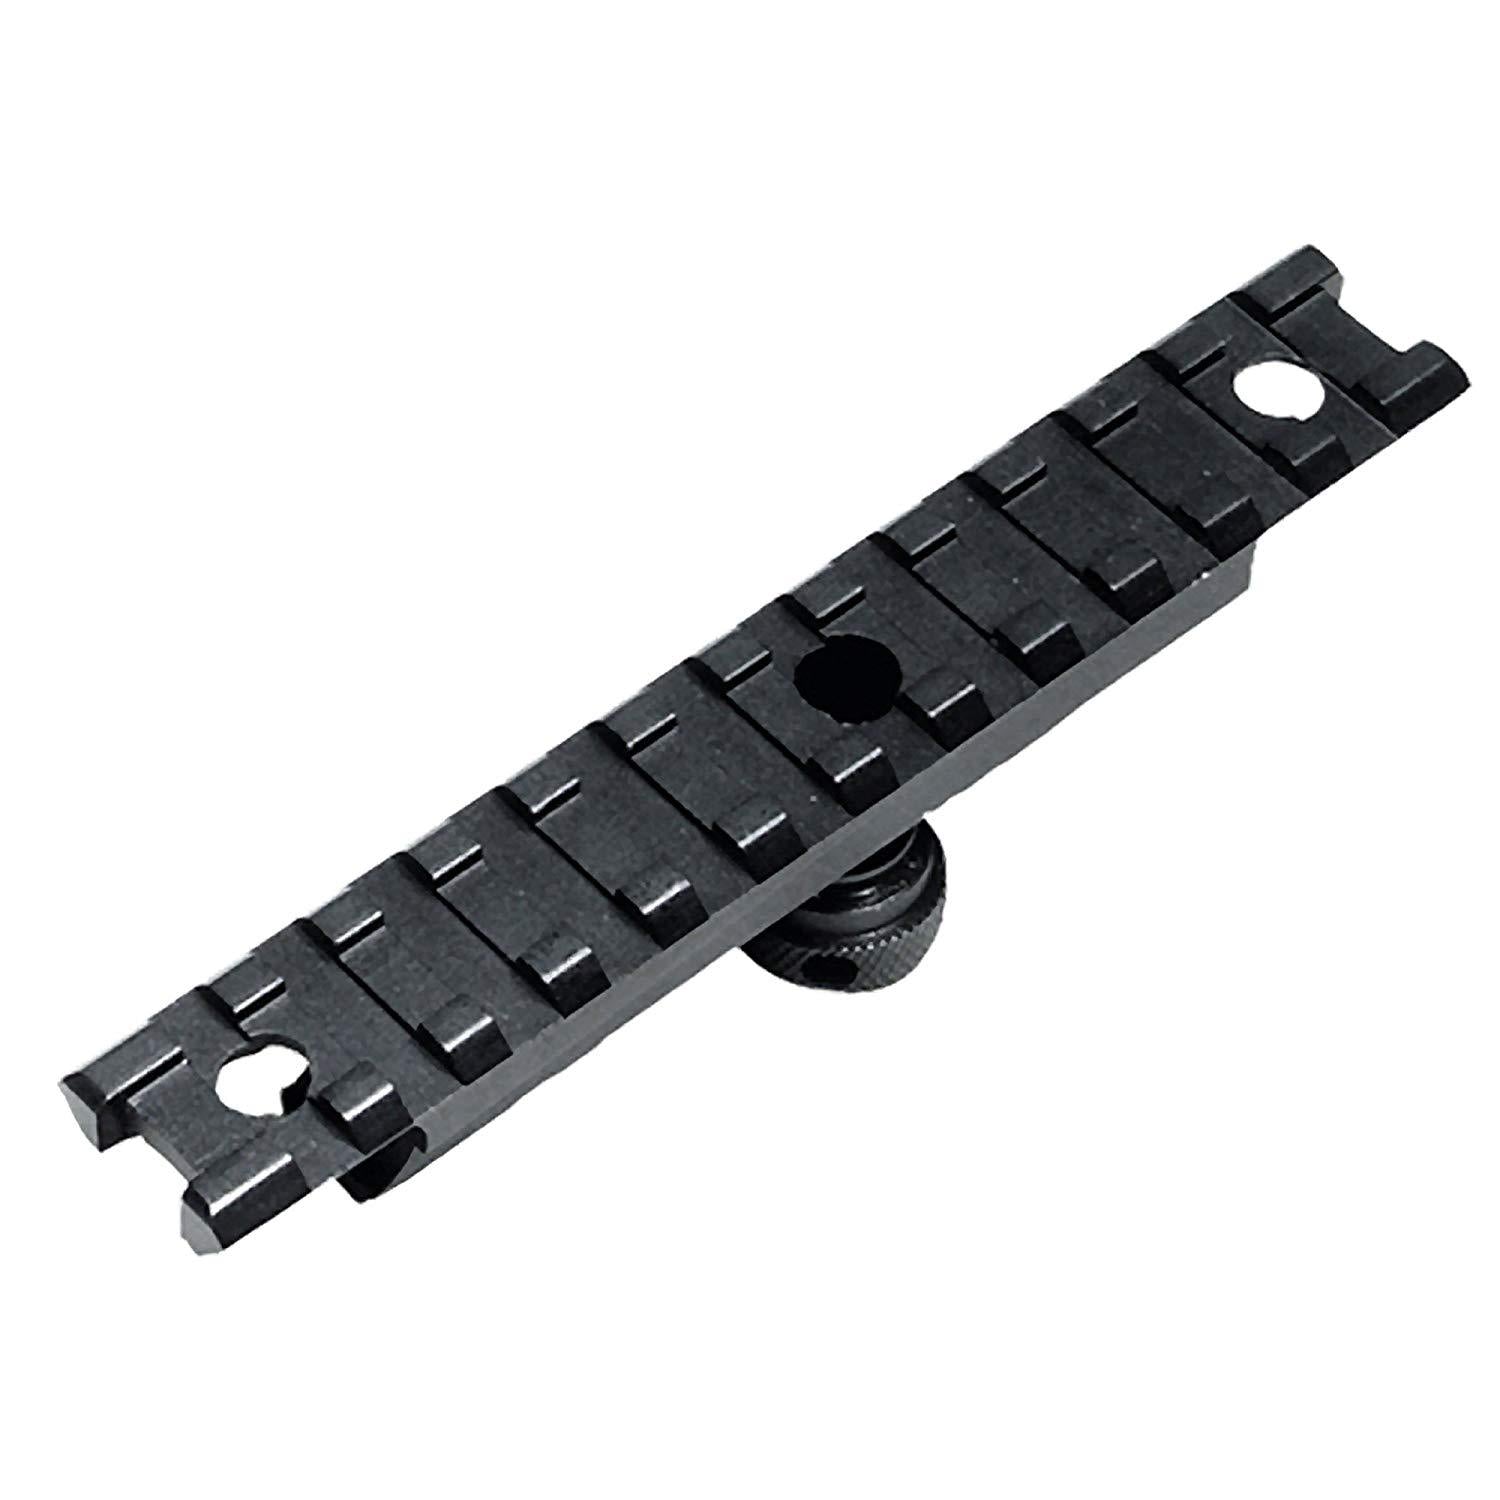 Rail Scope Mount Quick Release Detachable Carry Handle Flat Top 20mm fitzztyl co. 